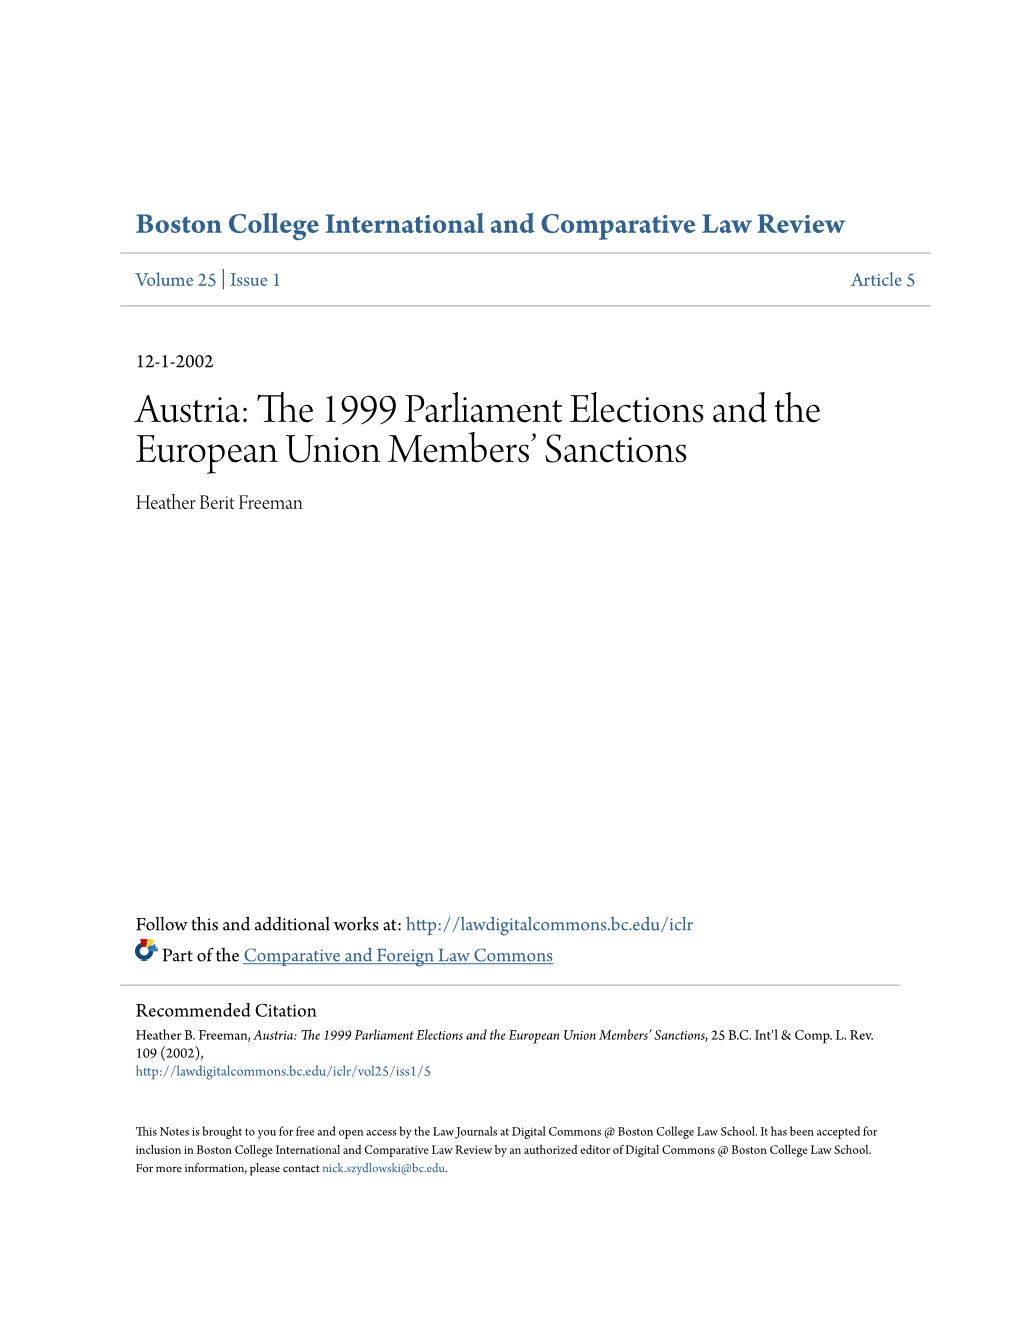 Austria: the 1999 Parliament Elections and the European Union Members’ Sanctions, 25 B.C